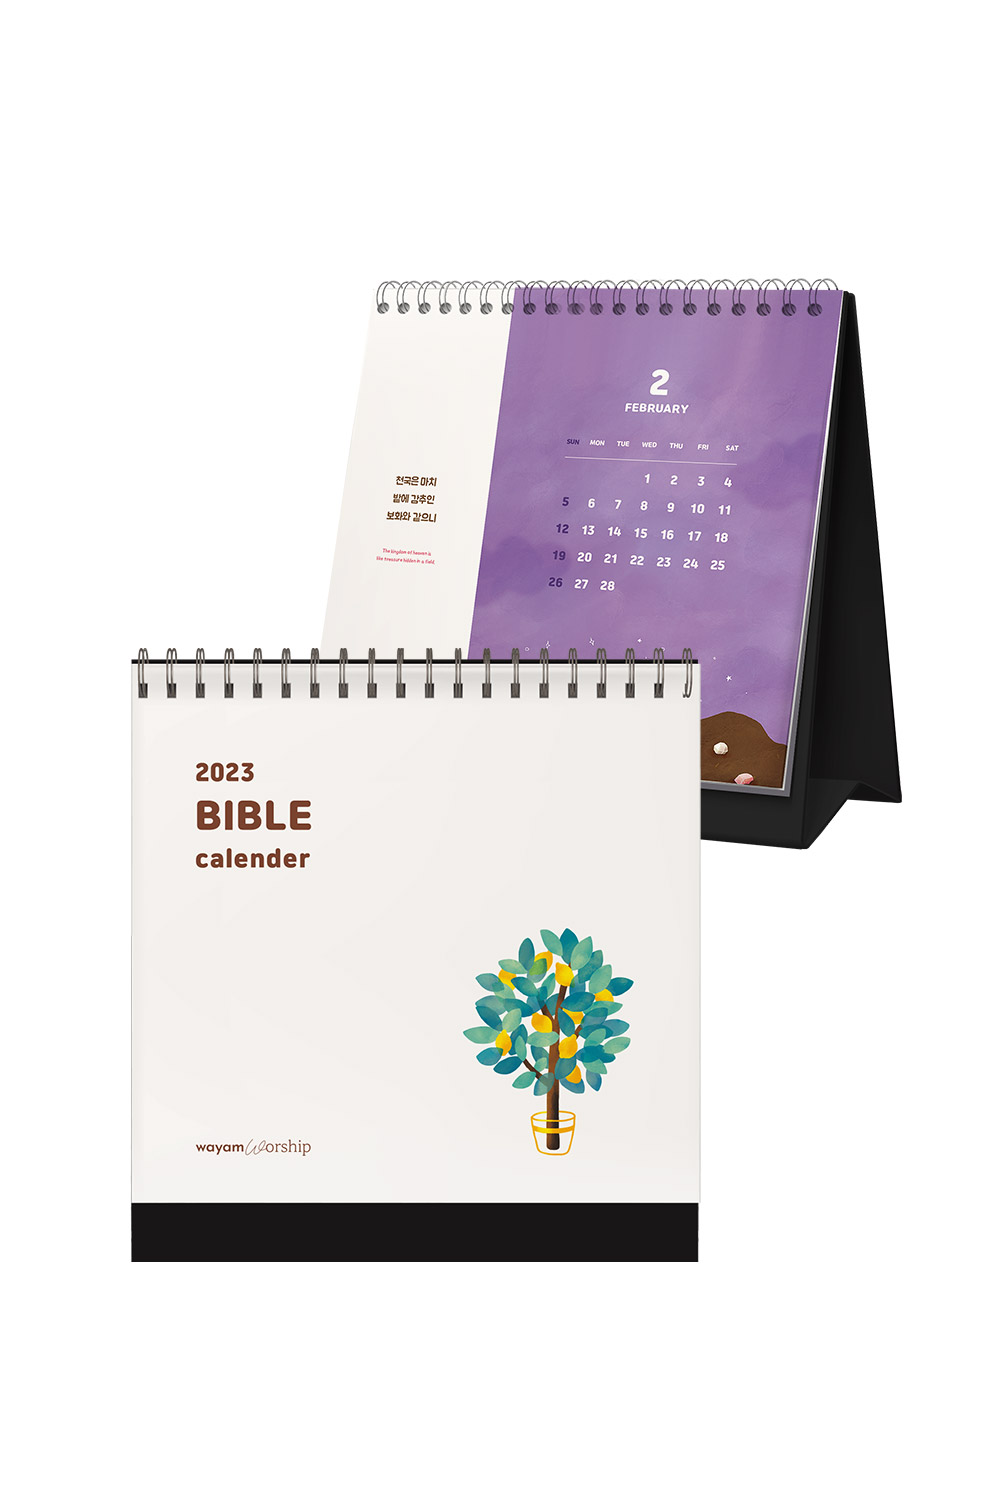 2023 Illustration calendar - Bible